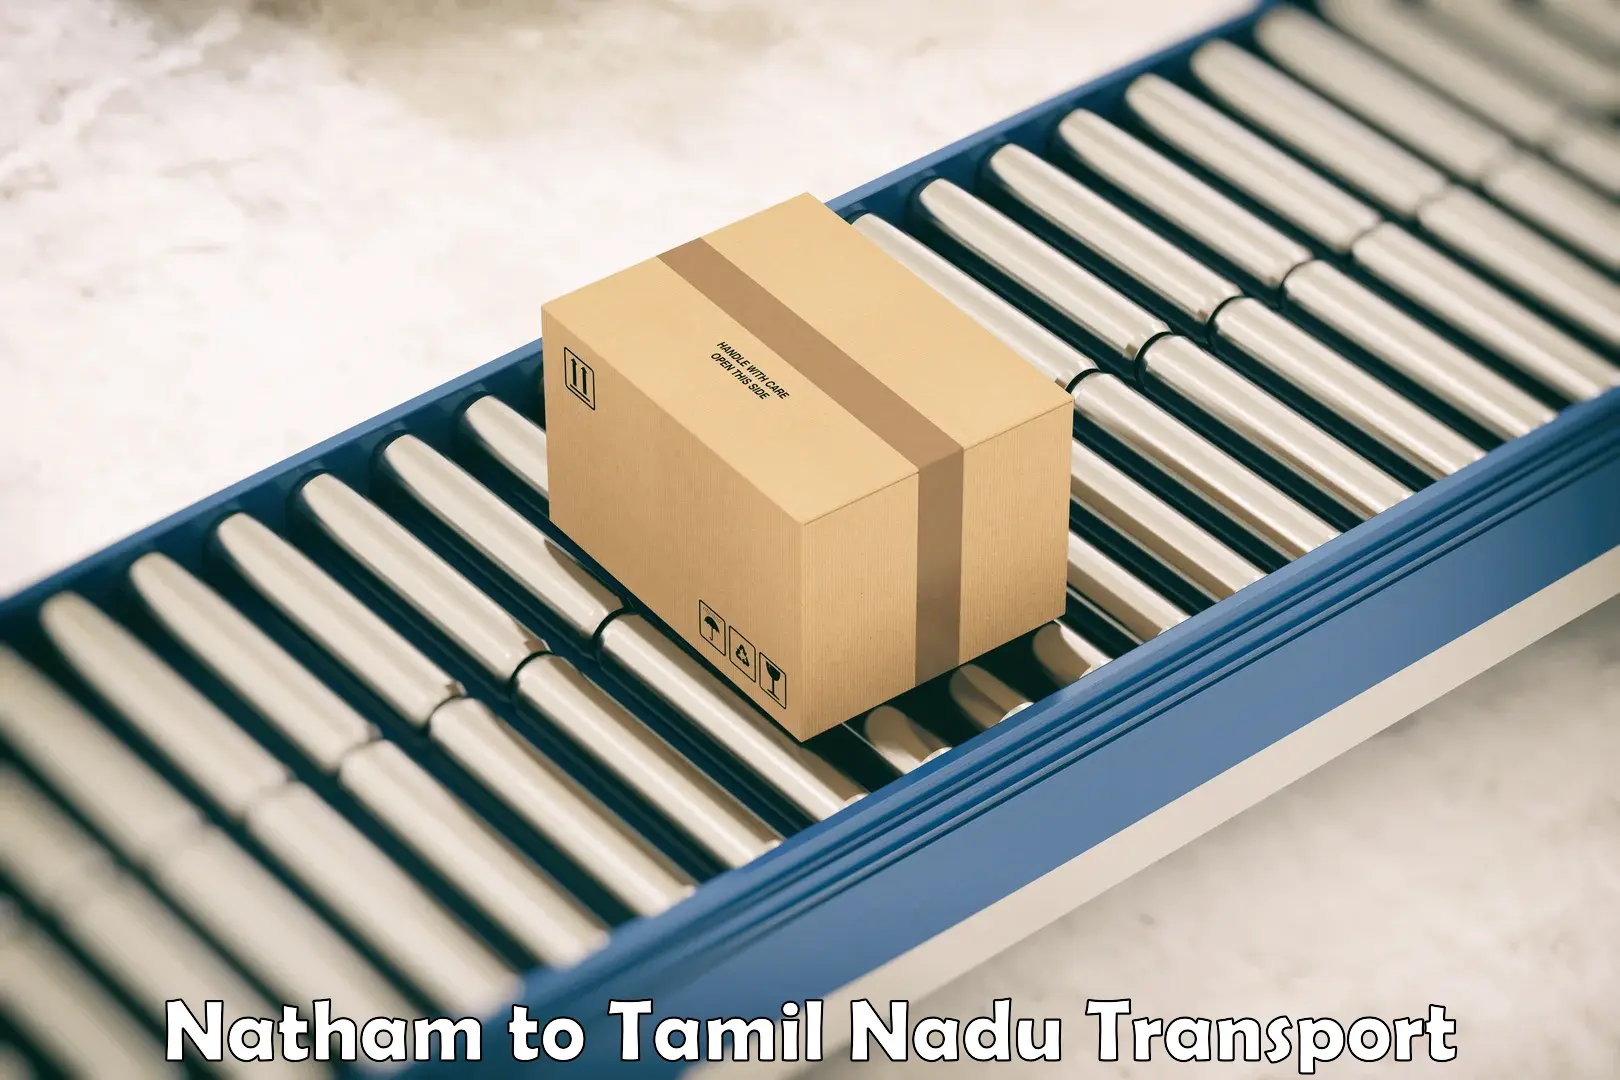 Cycle transportation service Natham to Tamil Nadu